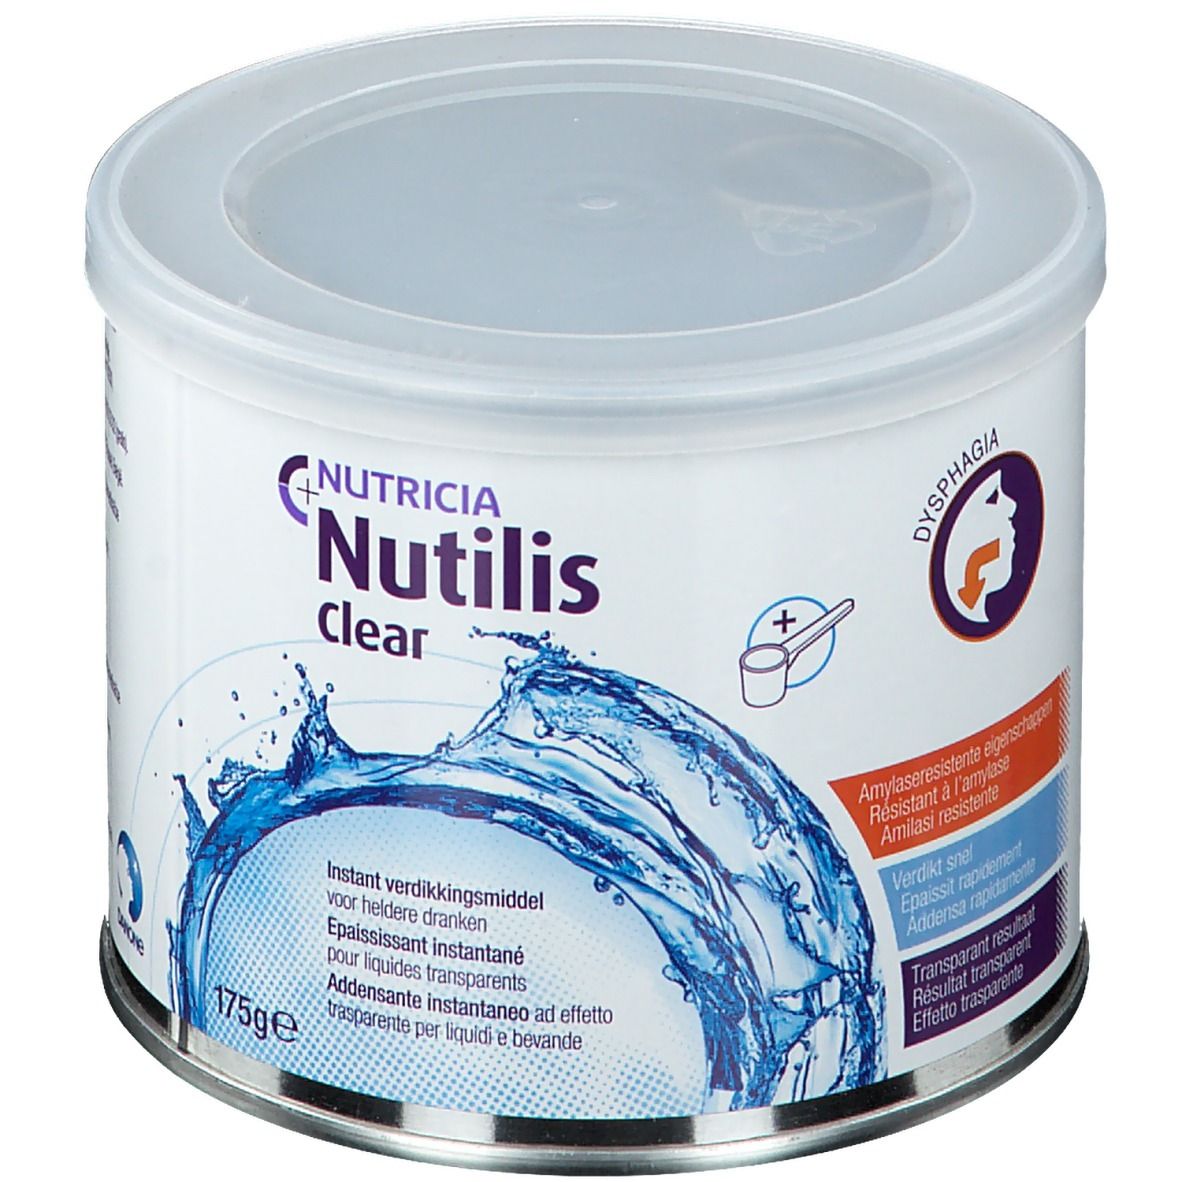 NUTRICIA Nutilis Clear